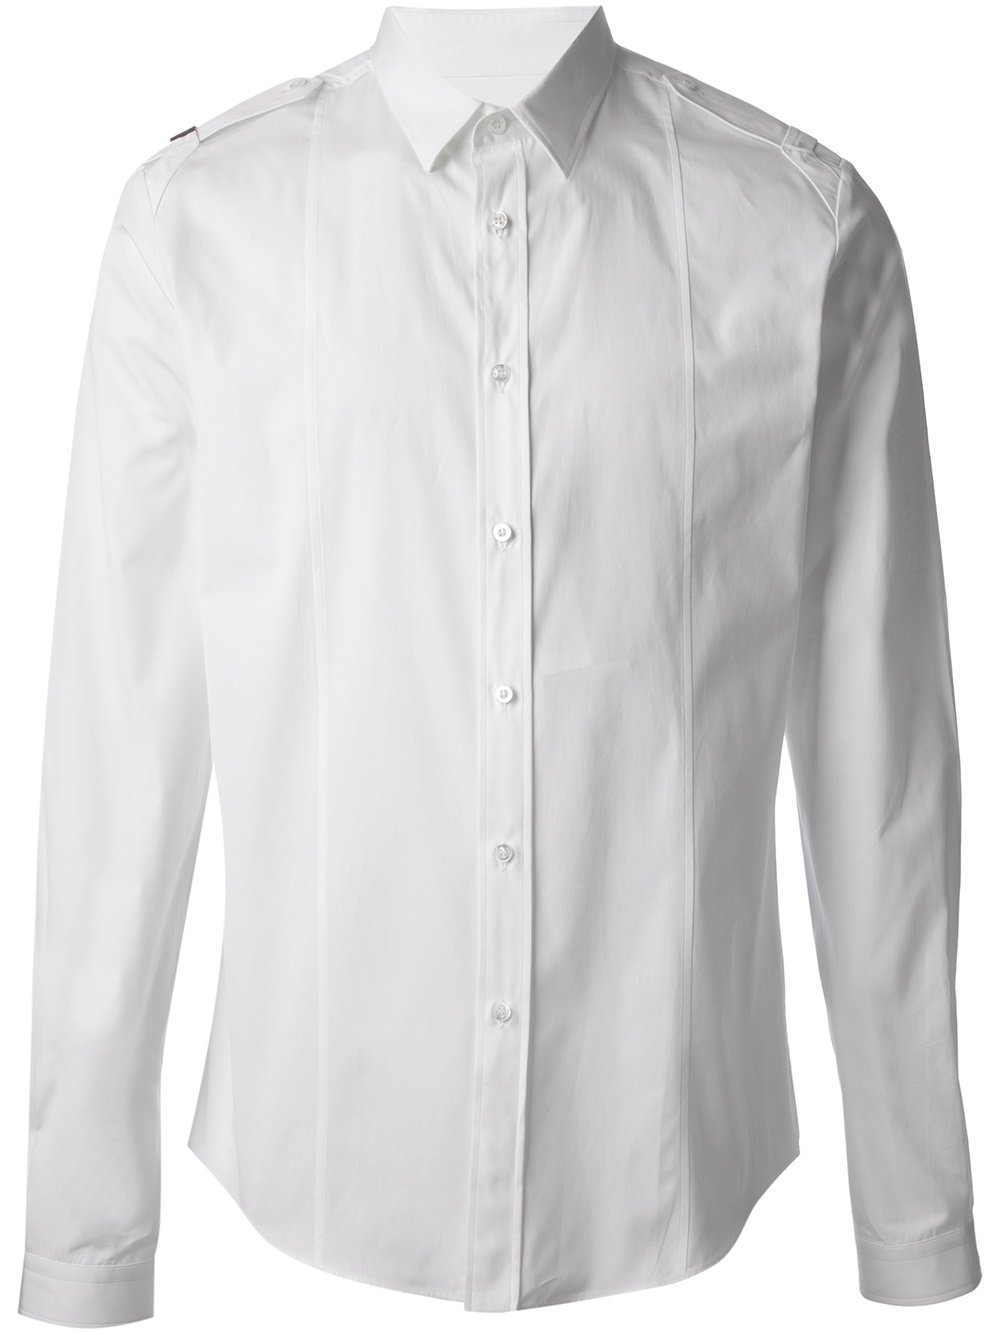 gucci plain white shirt